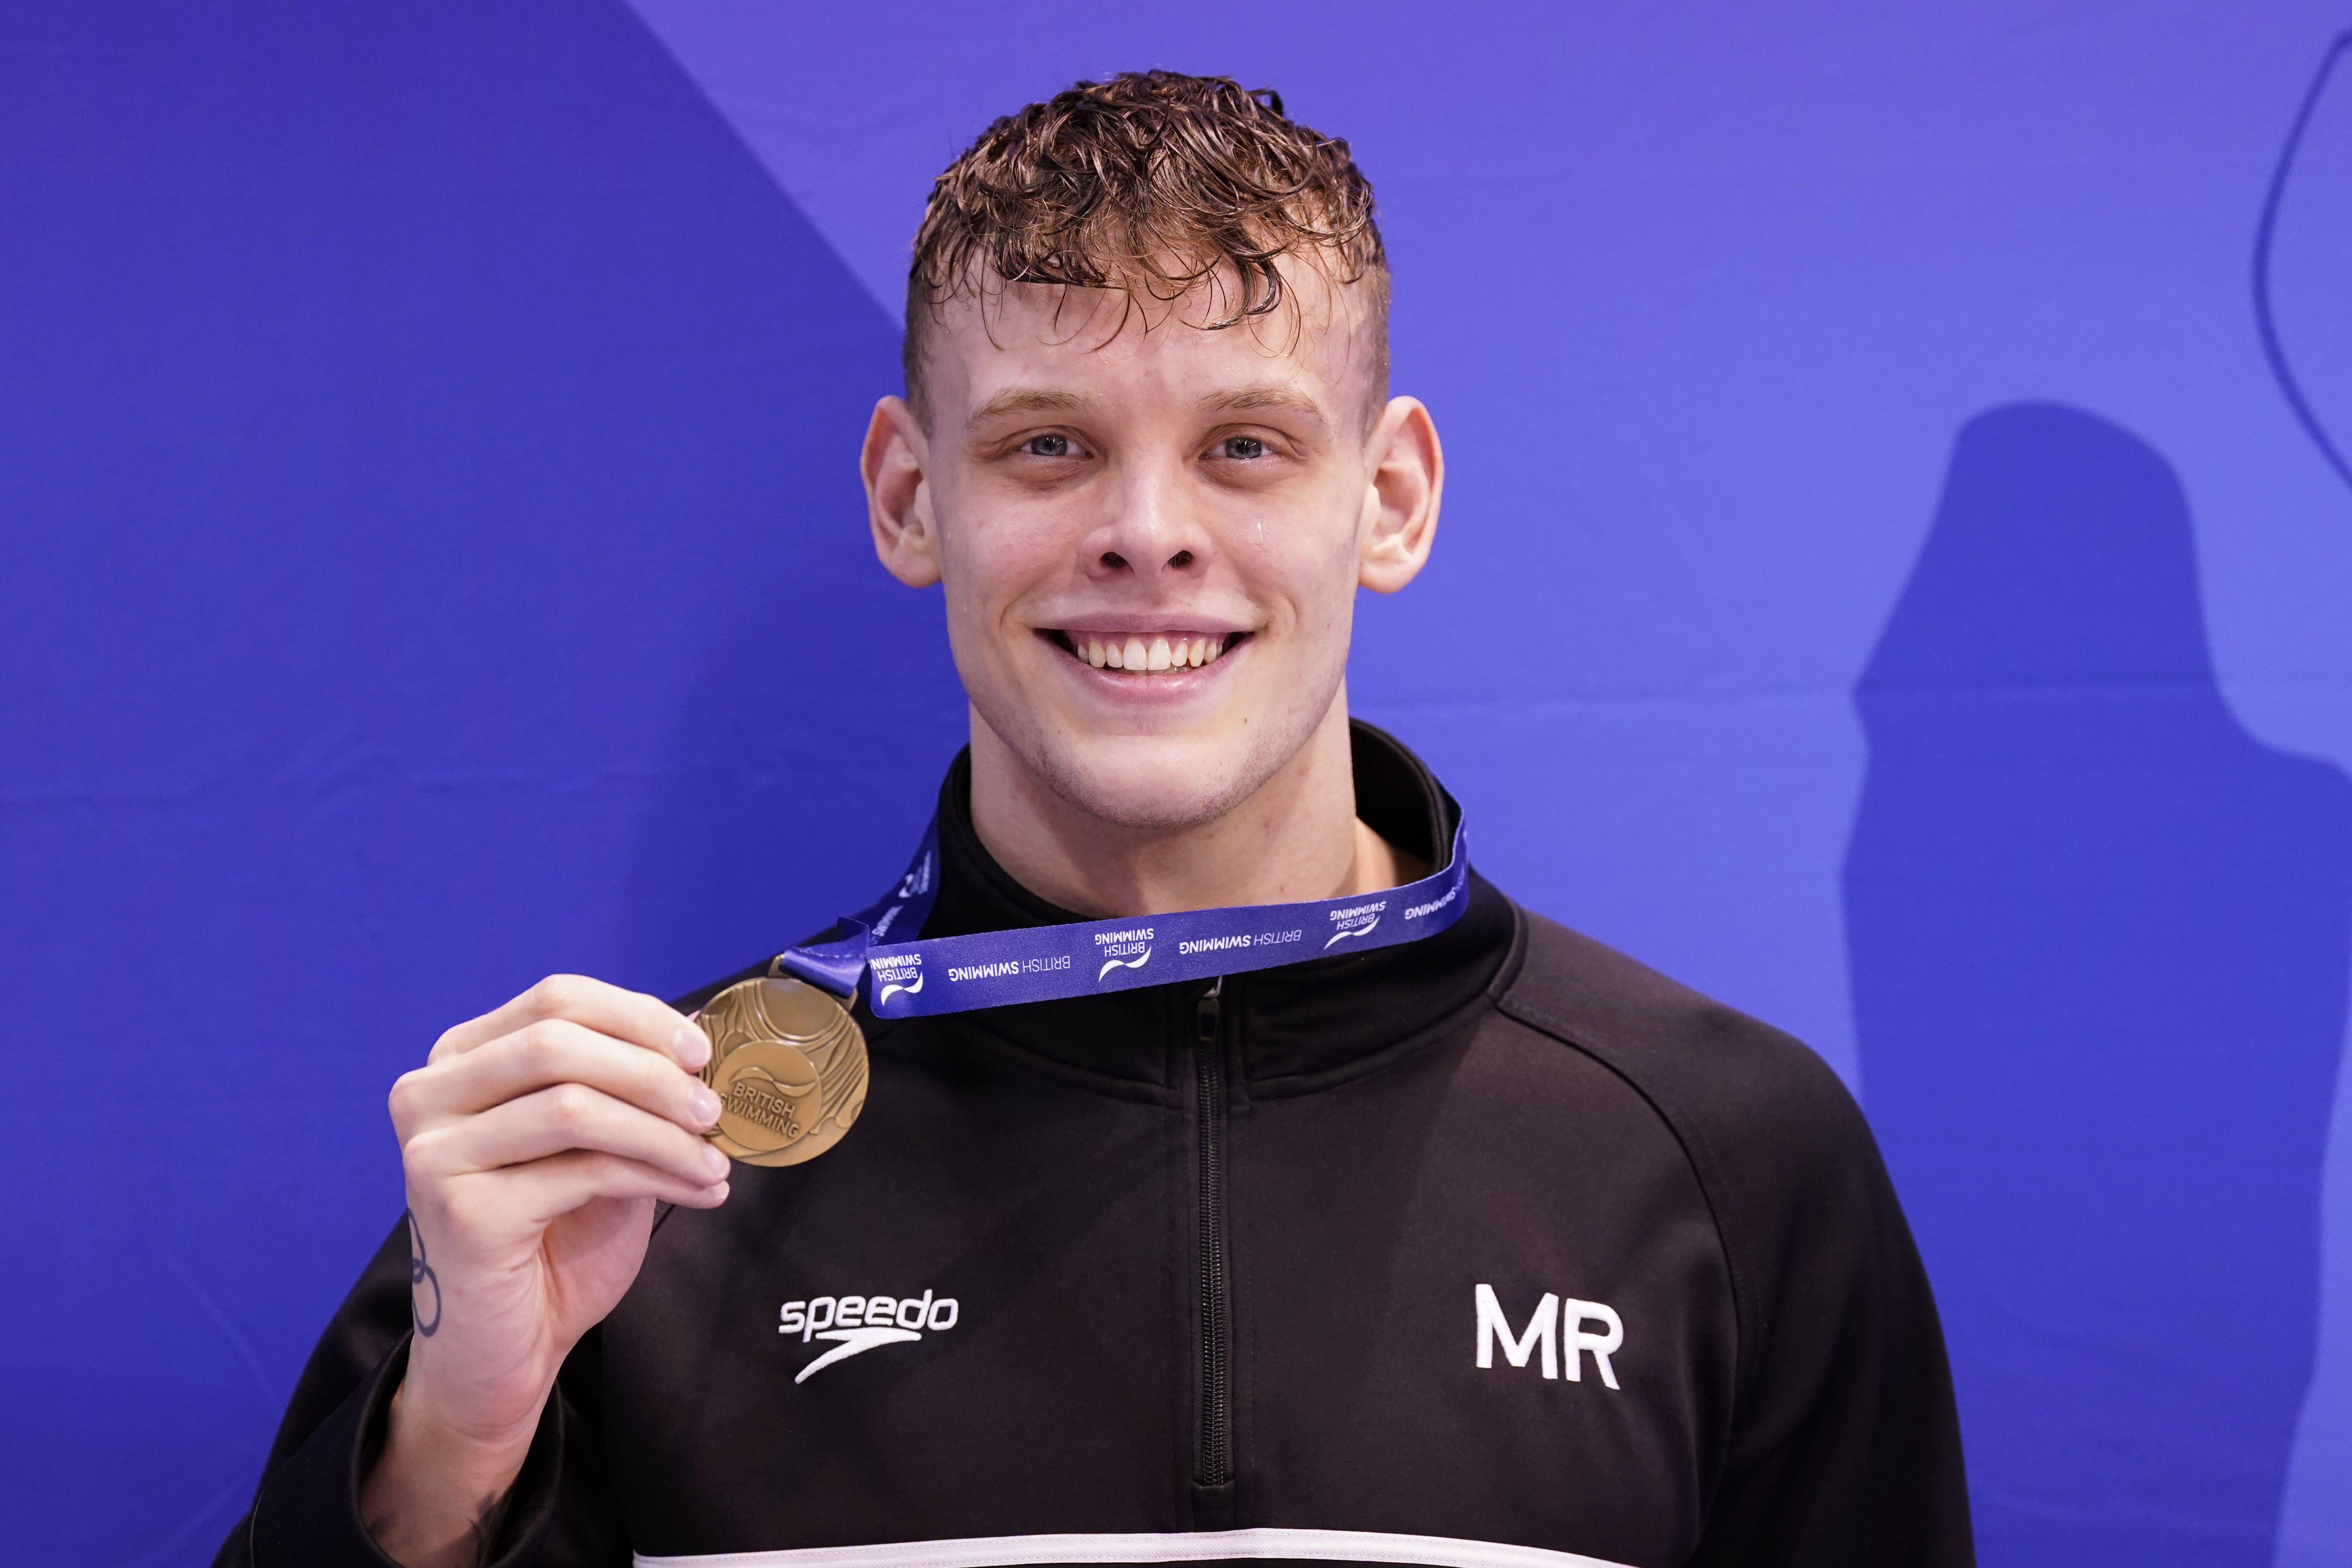 Matthew Richards brilliantly won 200m freestyle gold at the World Championship last year